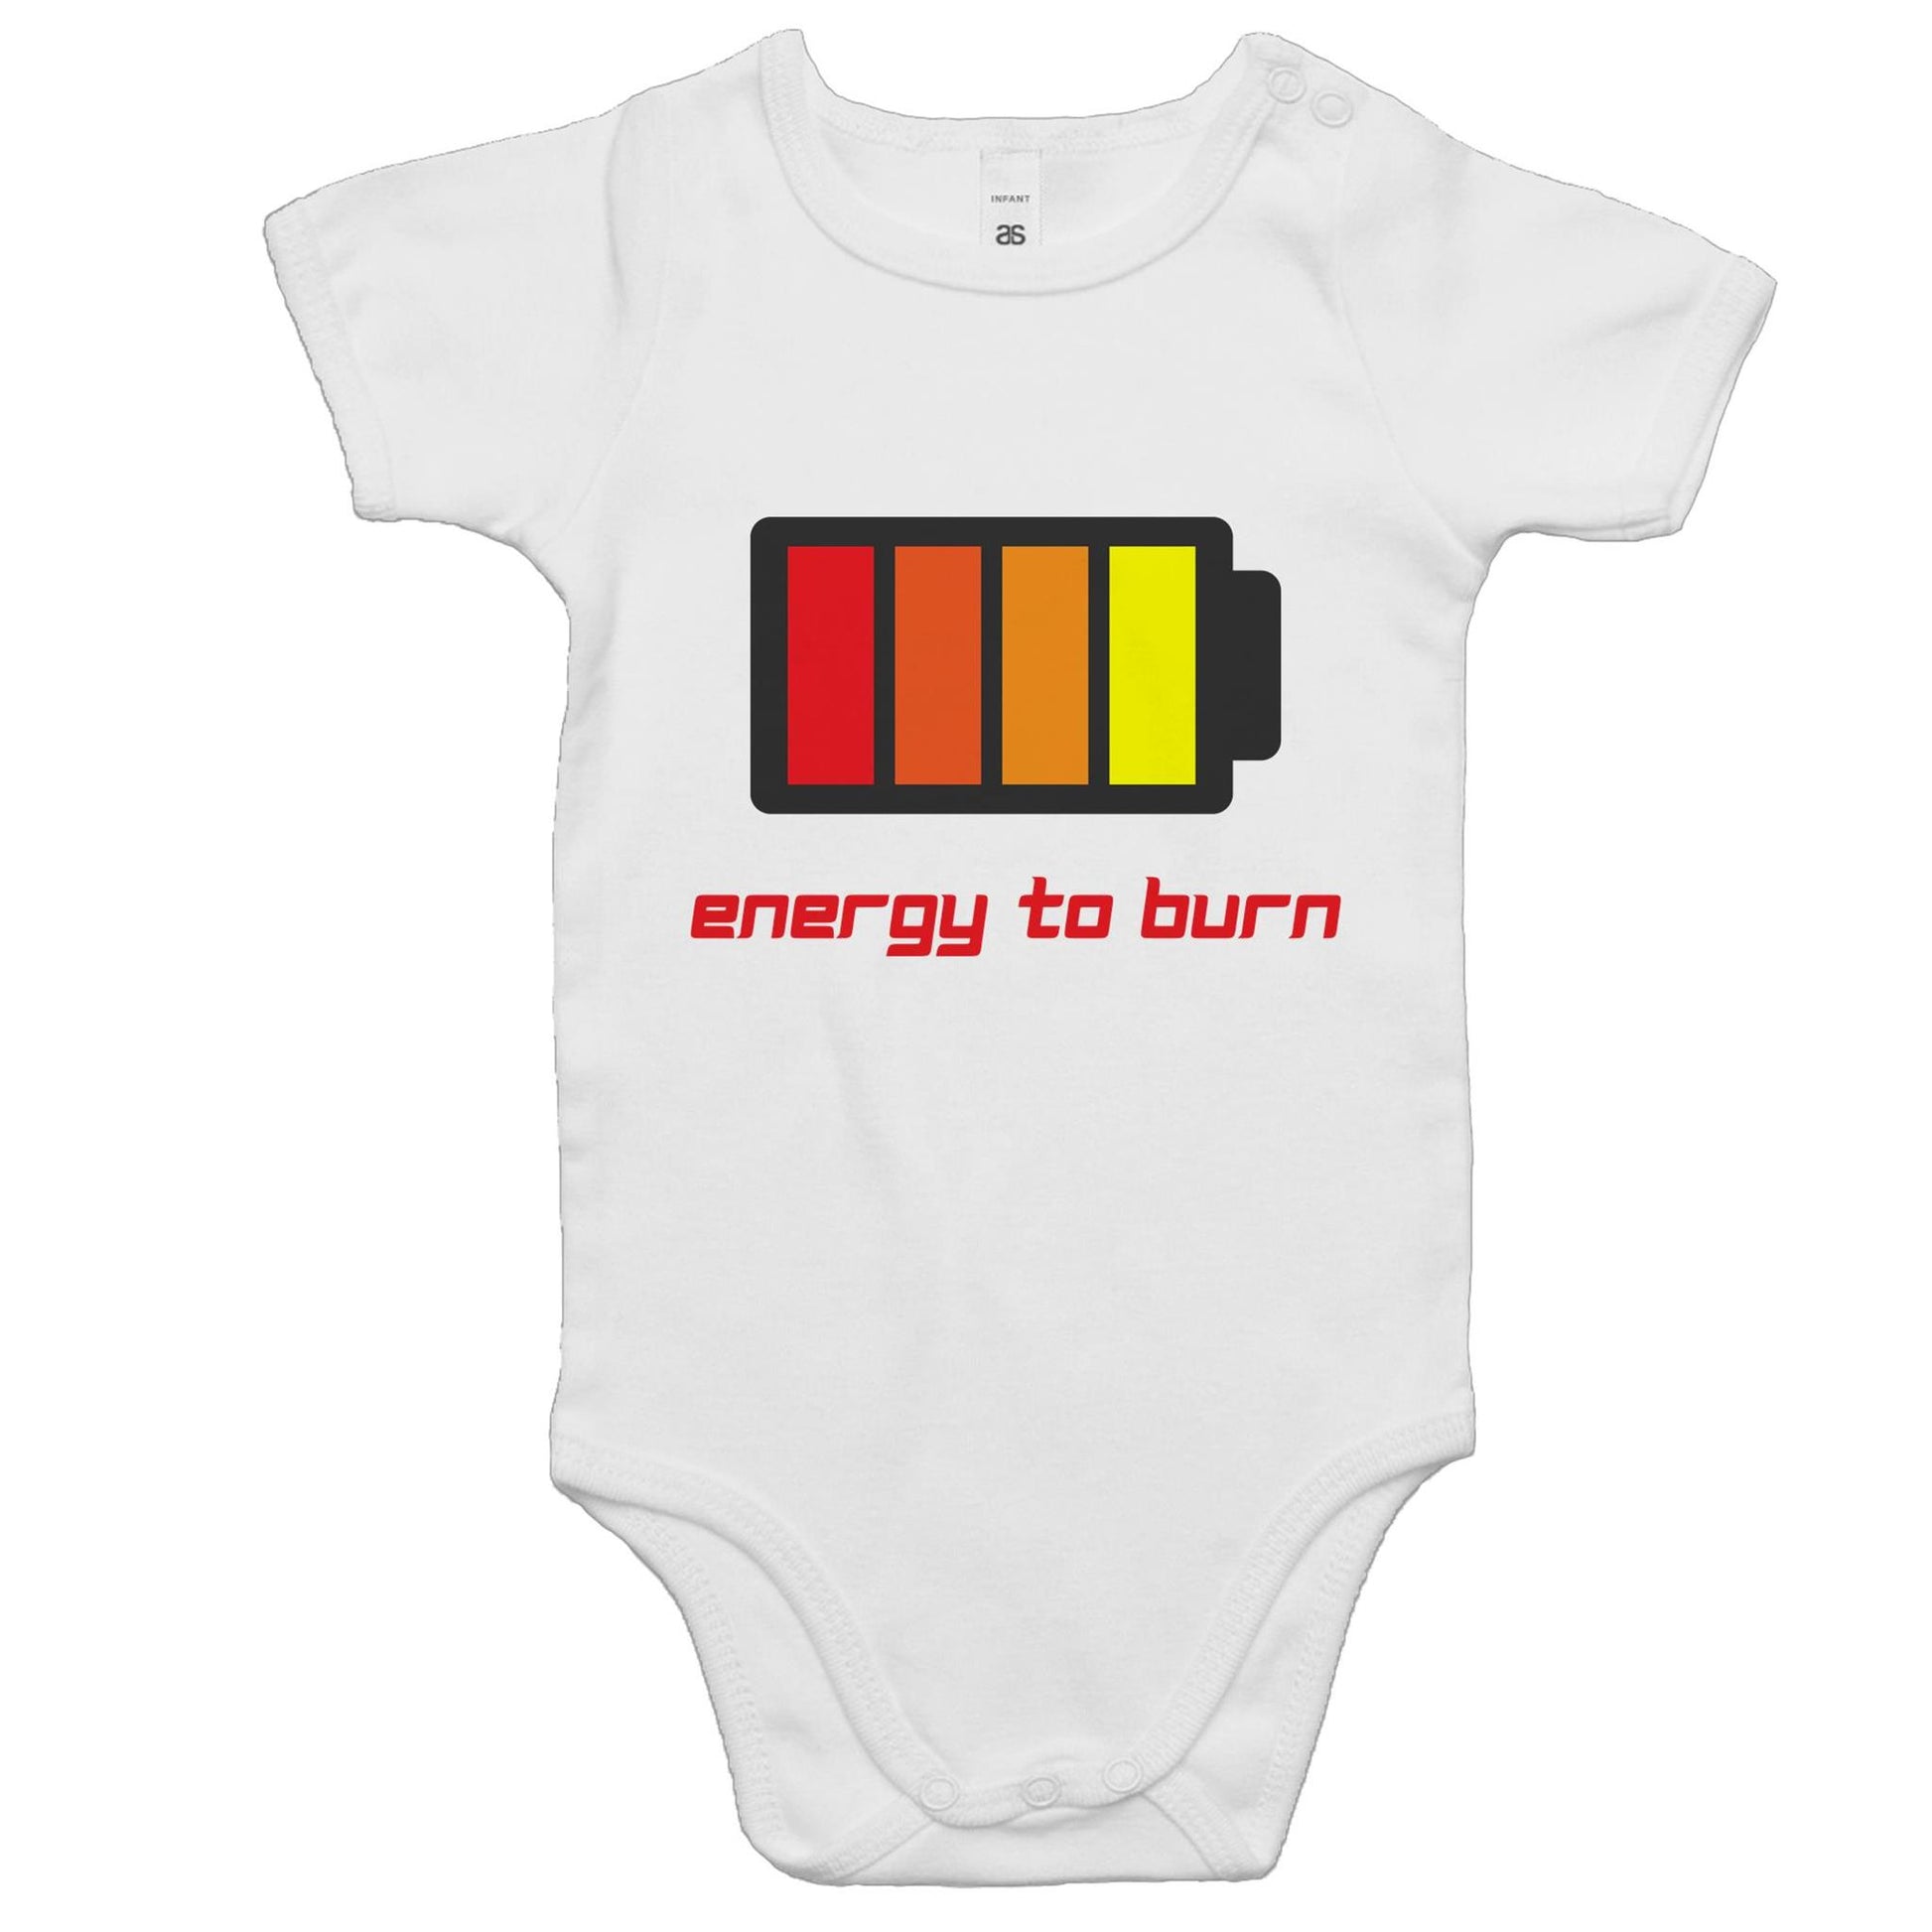 Energy To Burn - Baby Bodysuit White Baby Bodysuit kids